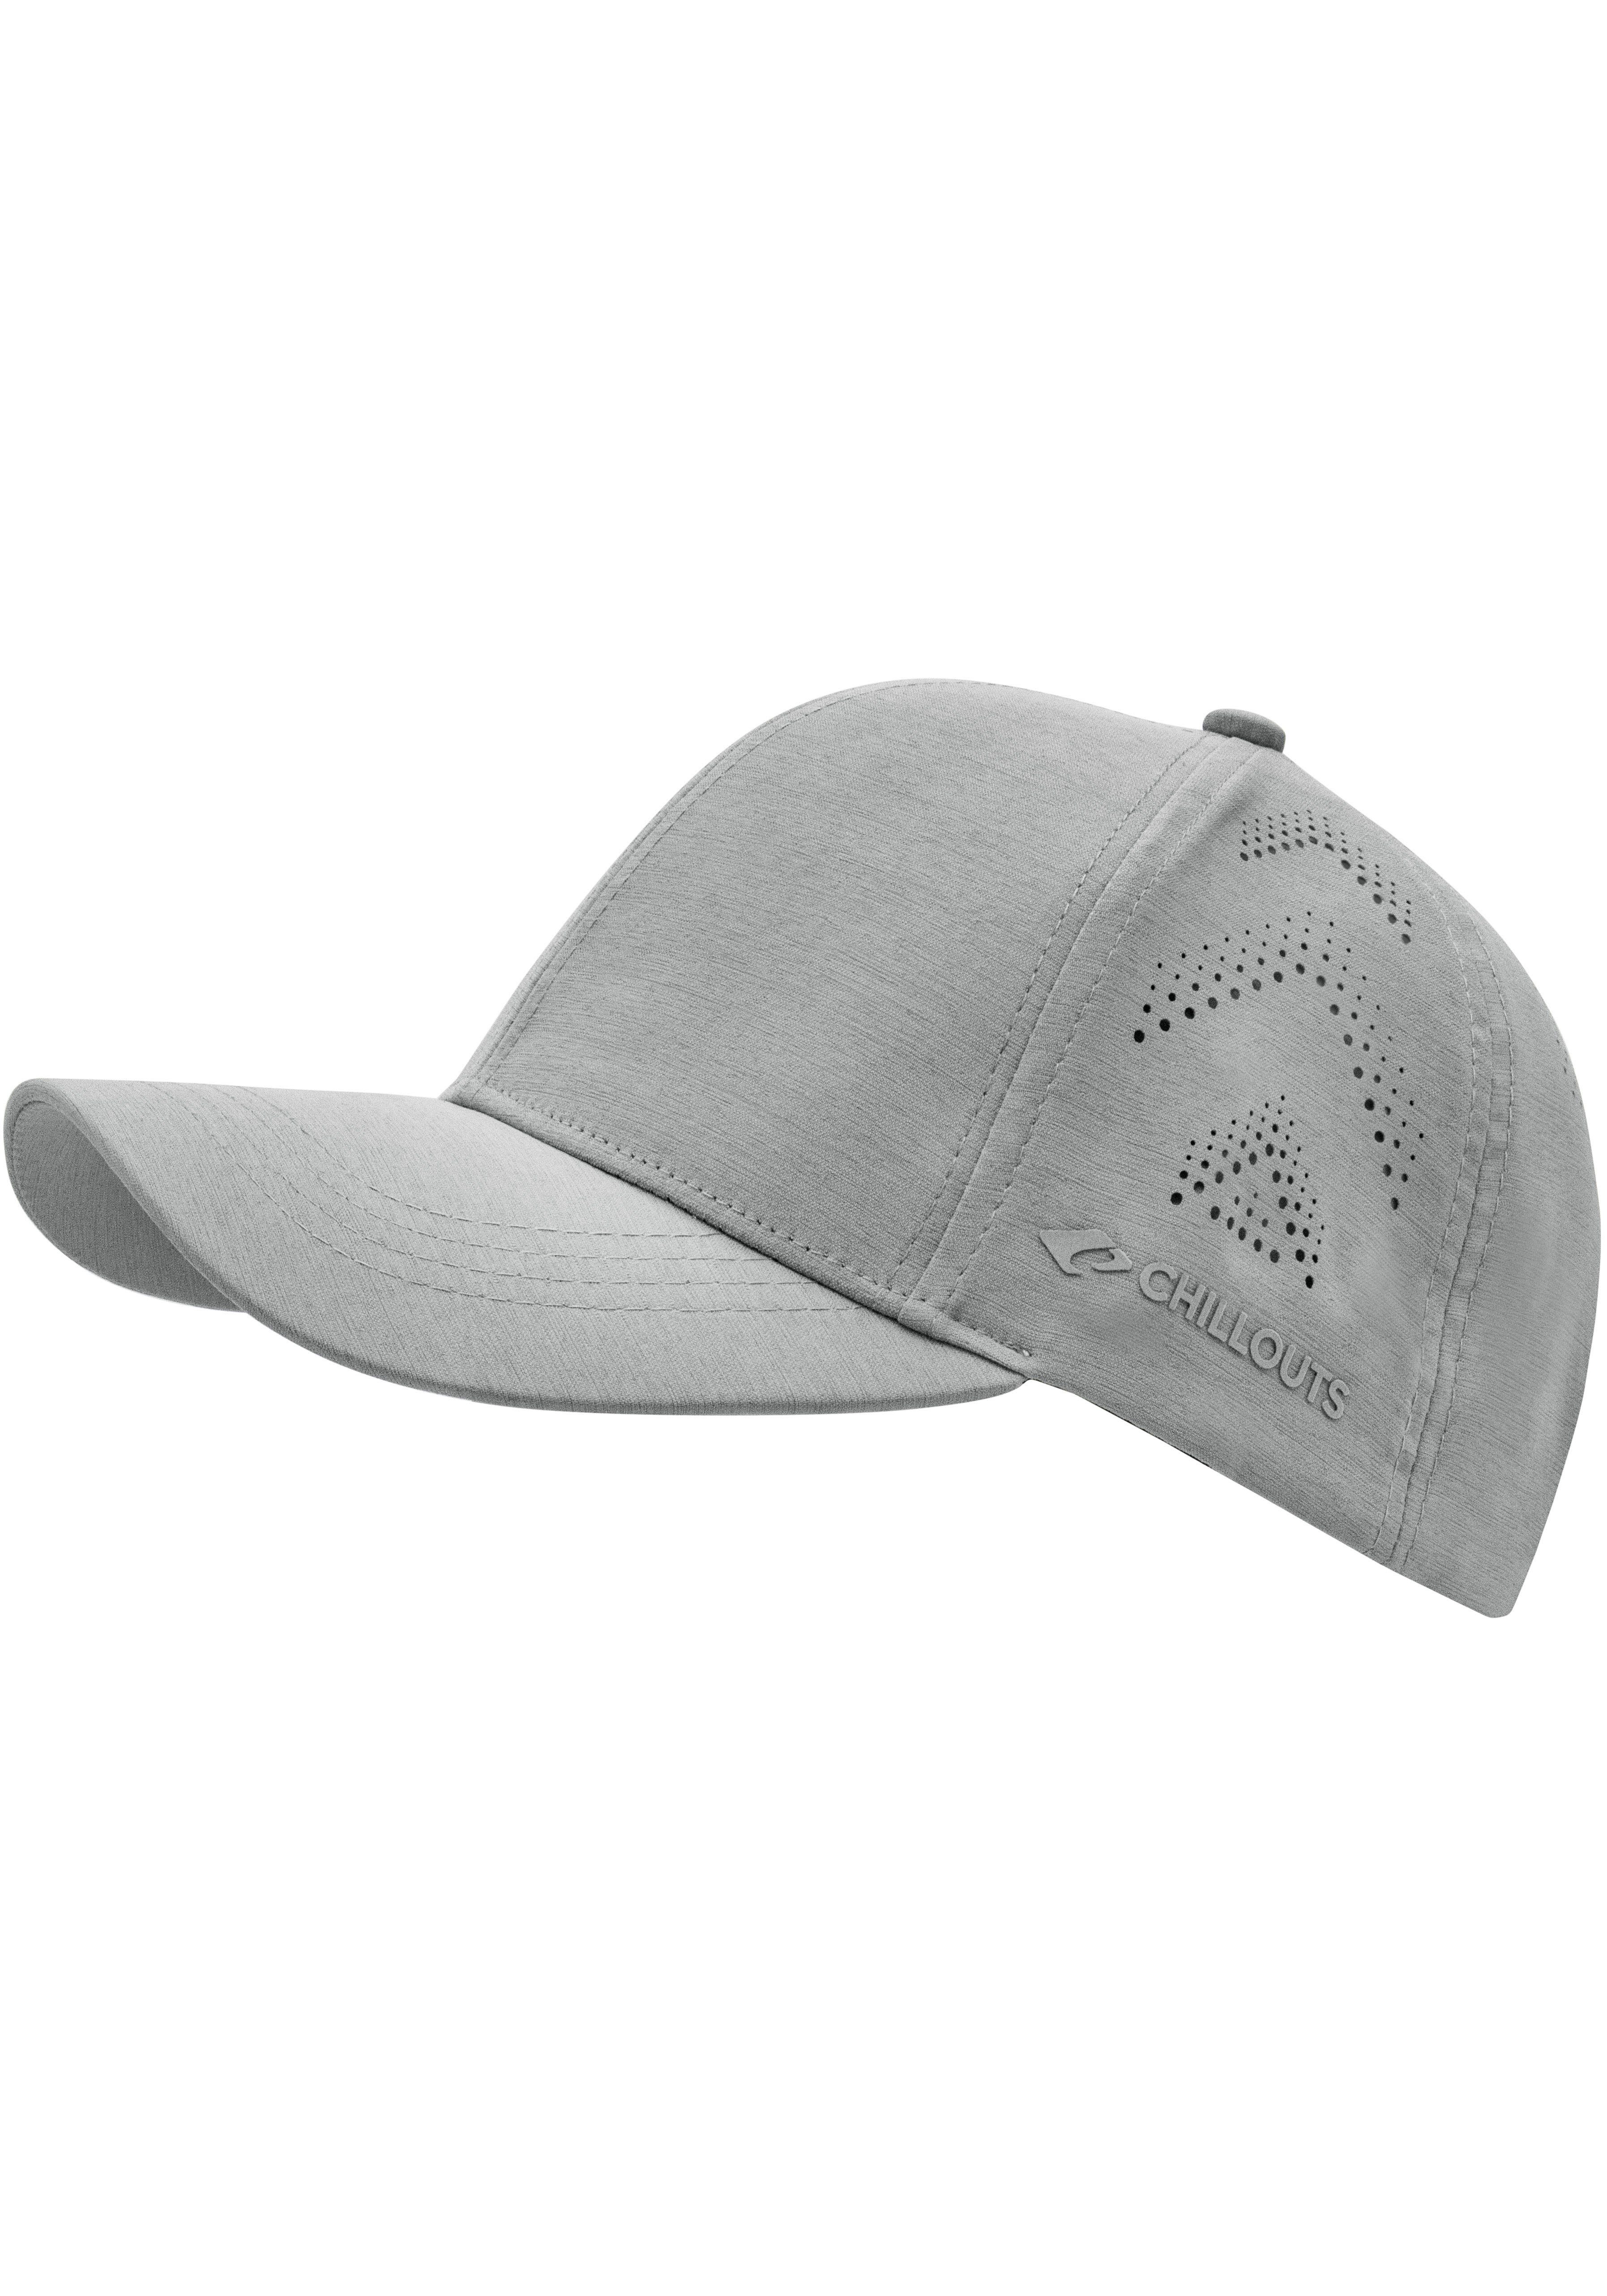 chillouts Baseball Cap Philadelphia Hat, Cap mit Klettverschluß, UPF50+ hellgrau | Baseball Caps